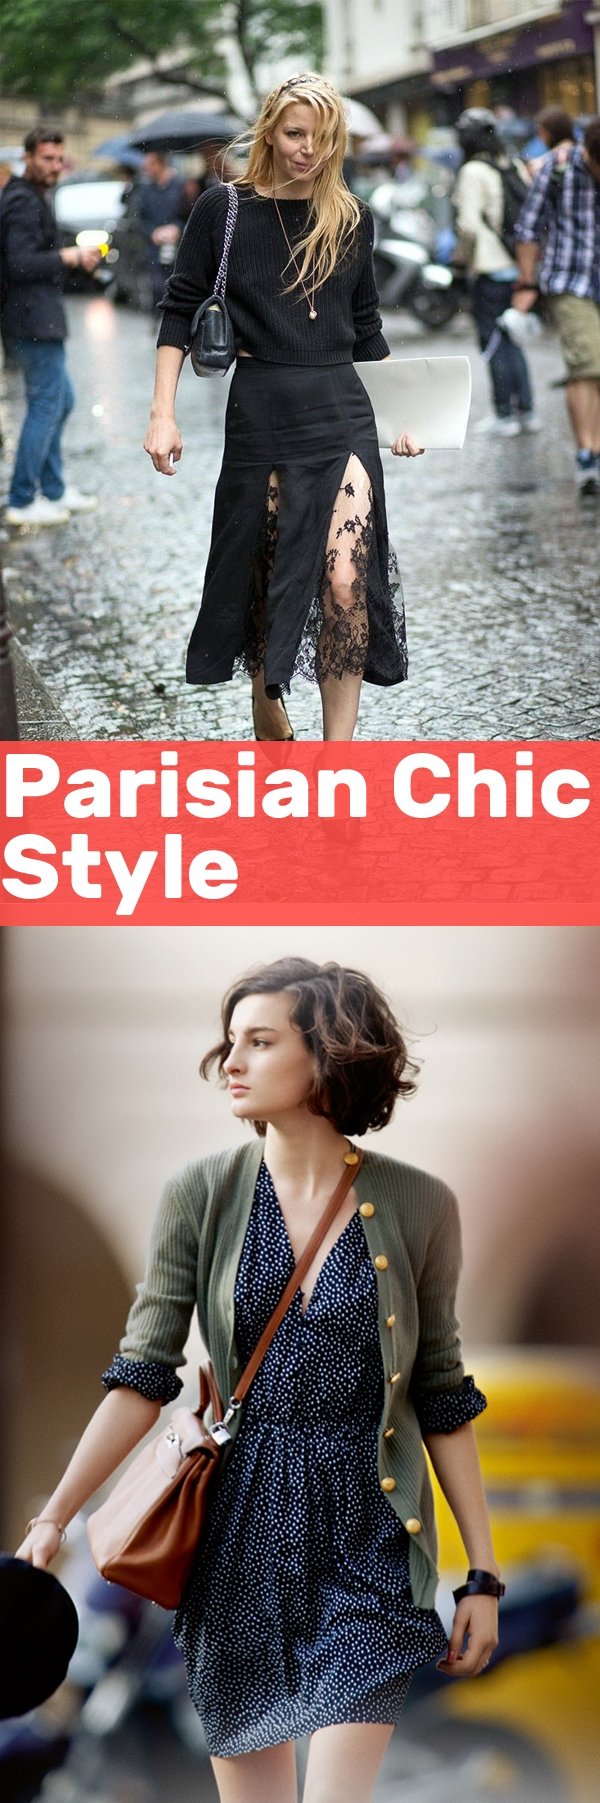 Parisian Chic Street Style